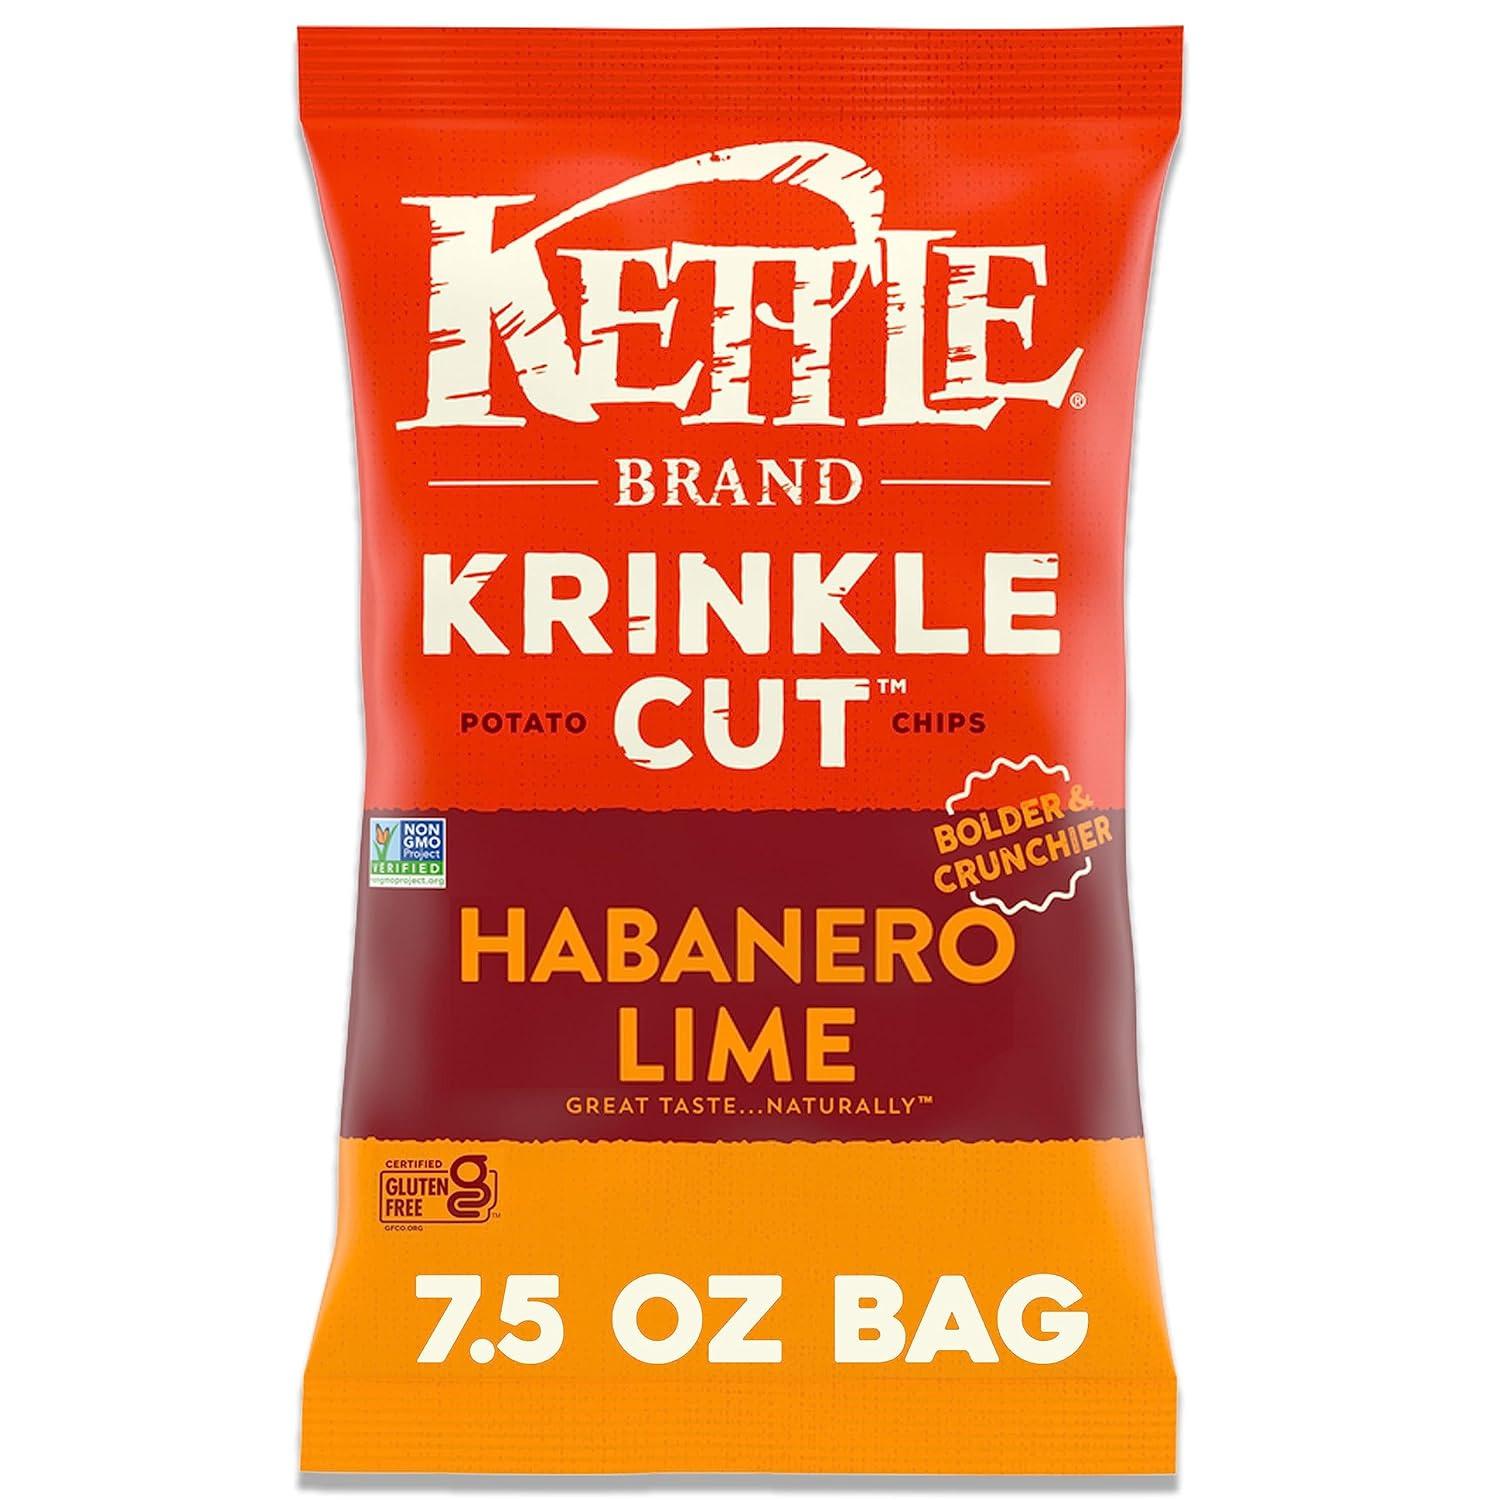 Kettle Brand Habanero Lime Potato Chips for $2.44